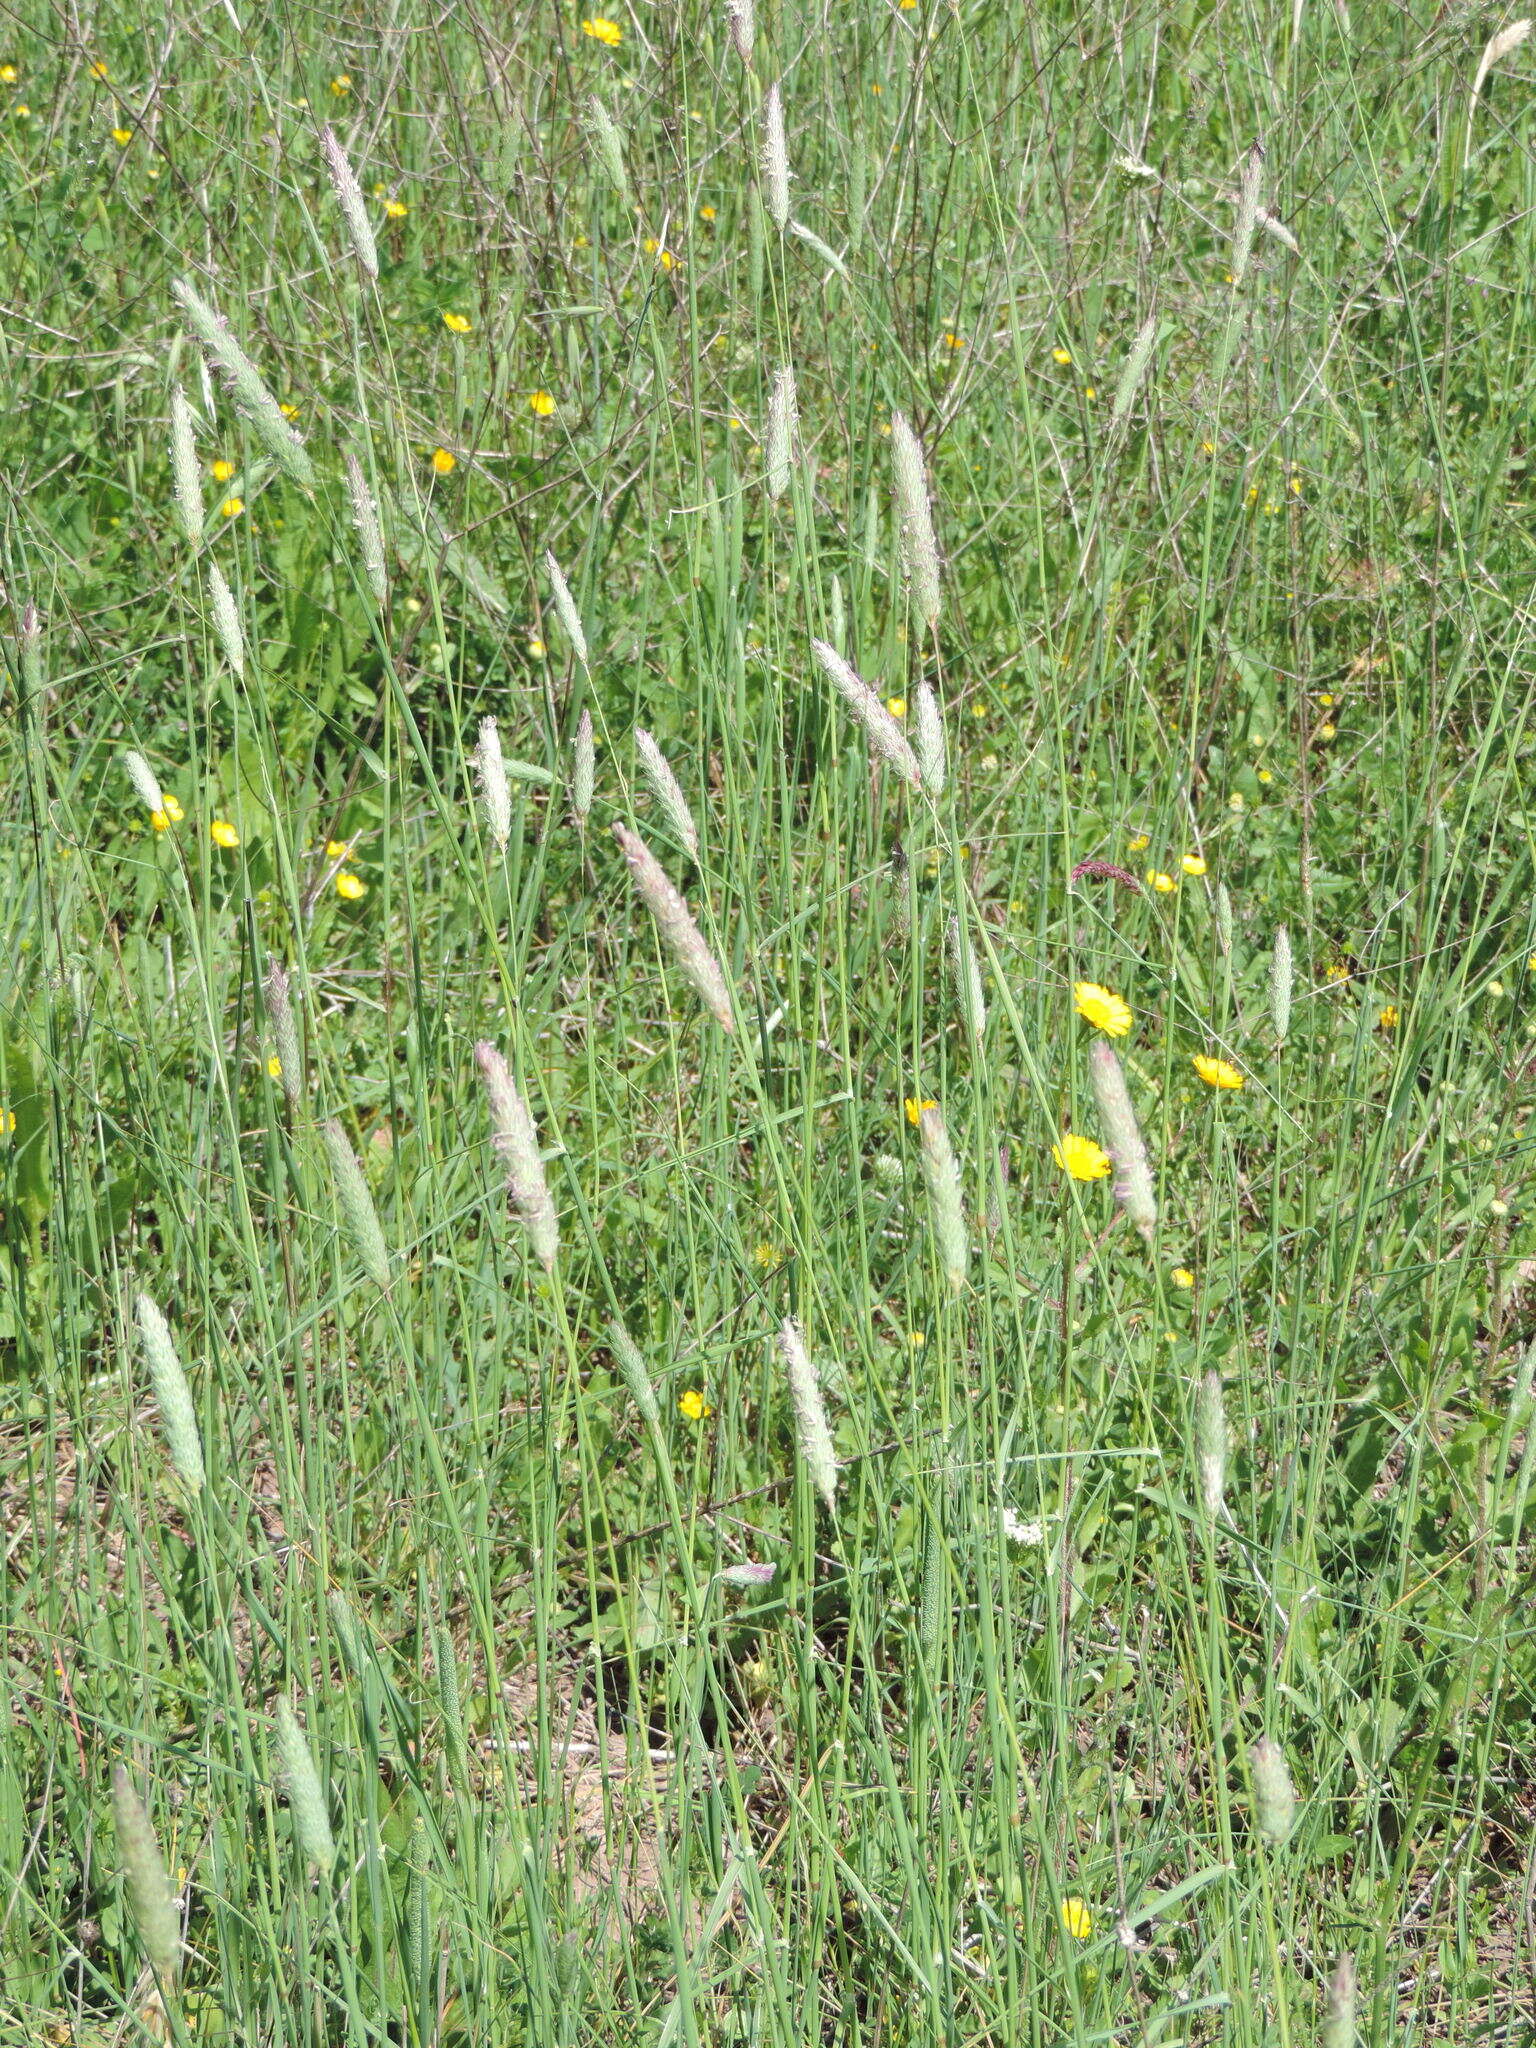 Image of sunolgrass